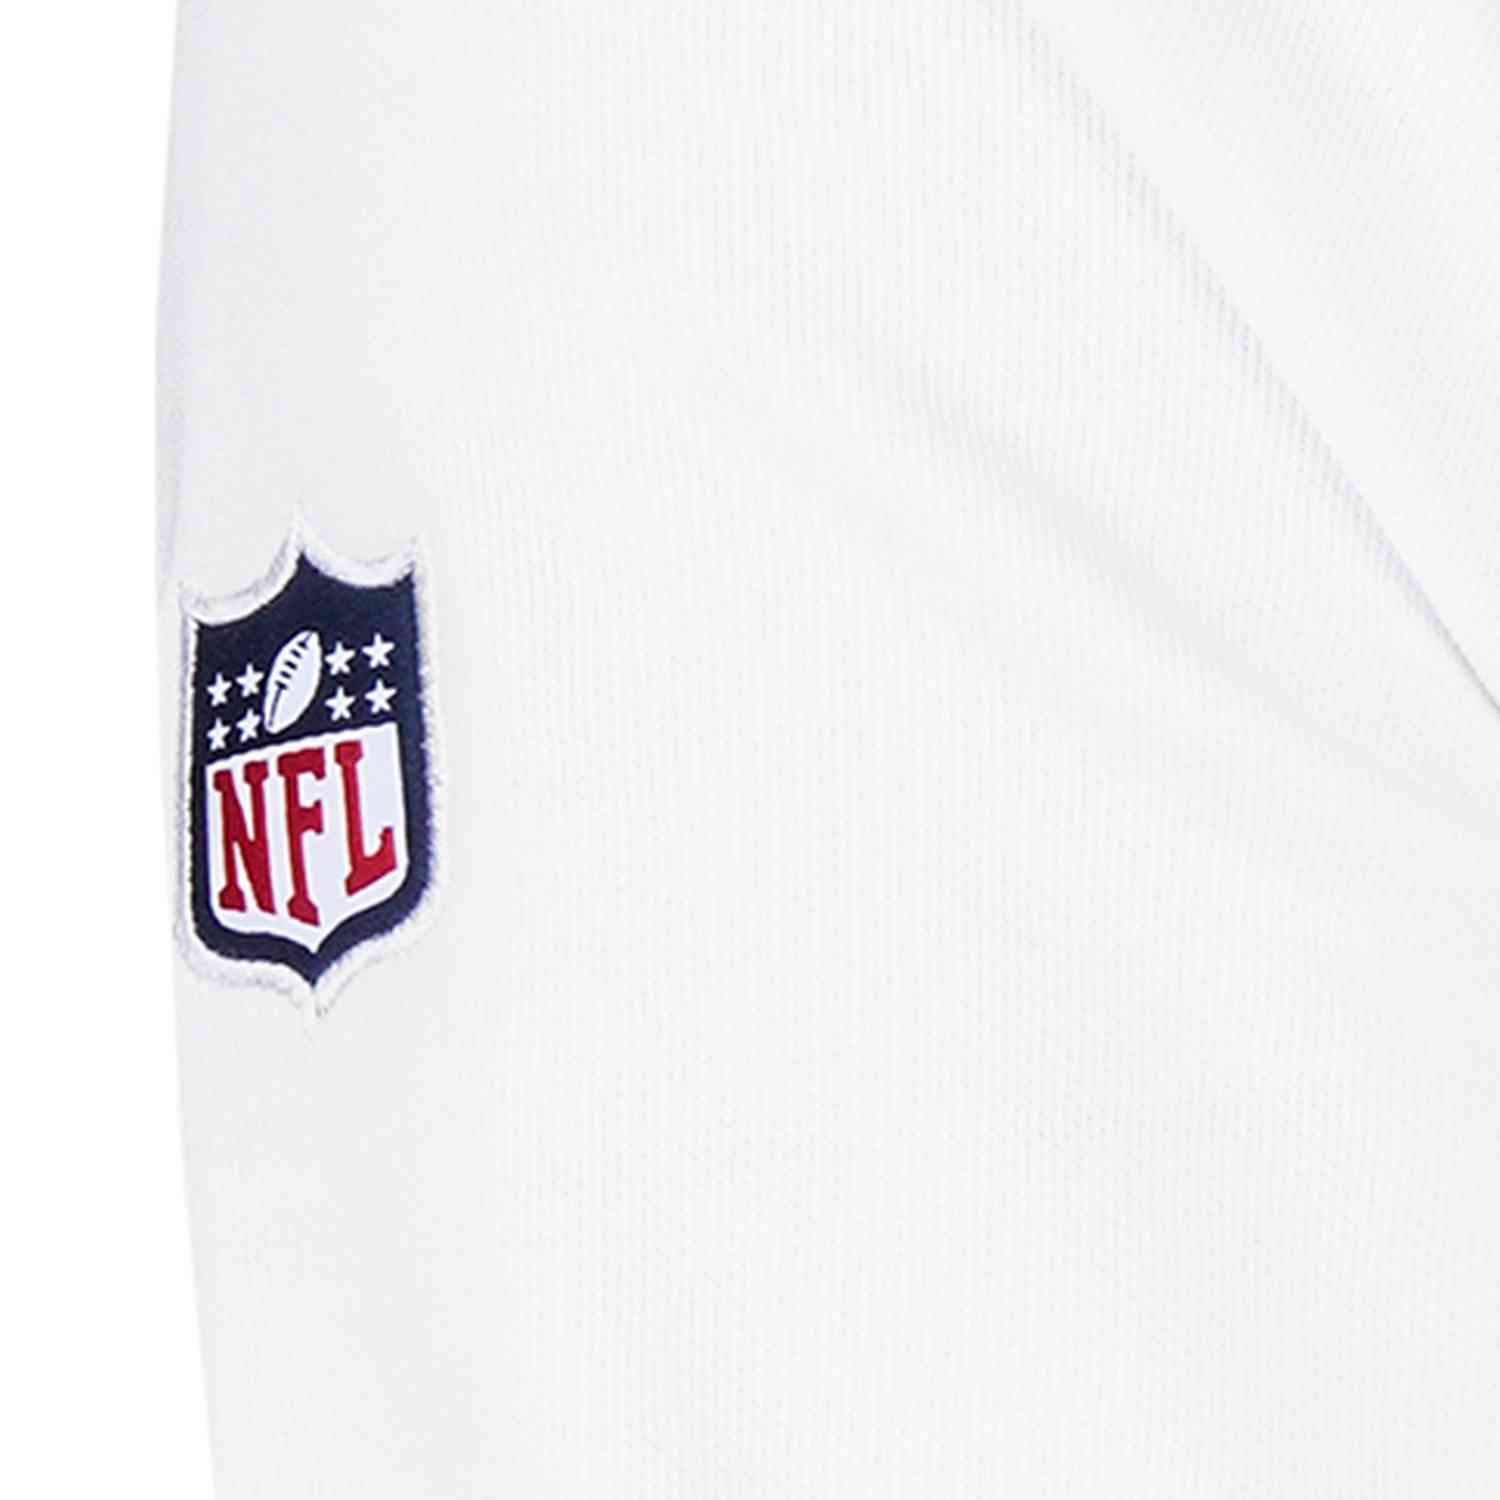 New Era - NFL New Orleans Saints Team Logo and Name Hoodie